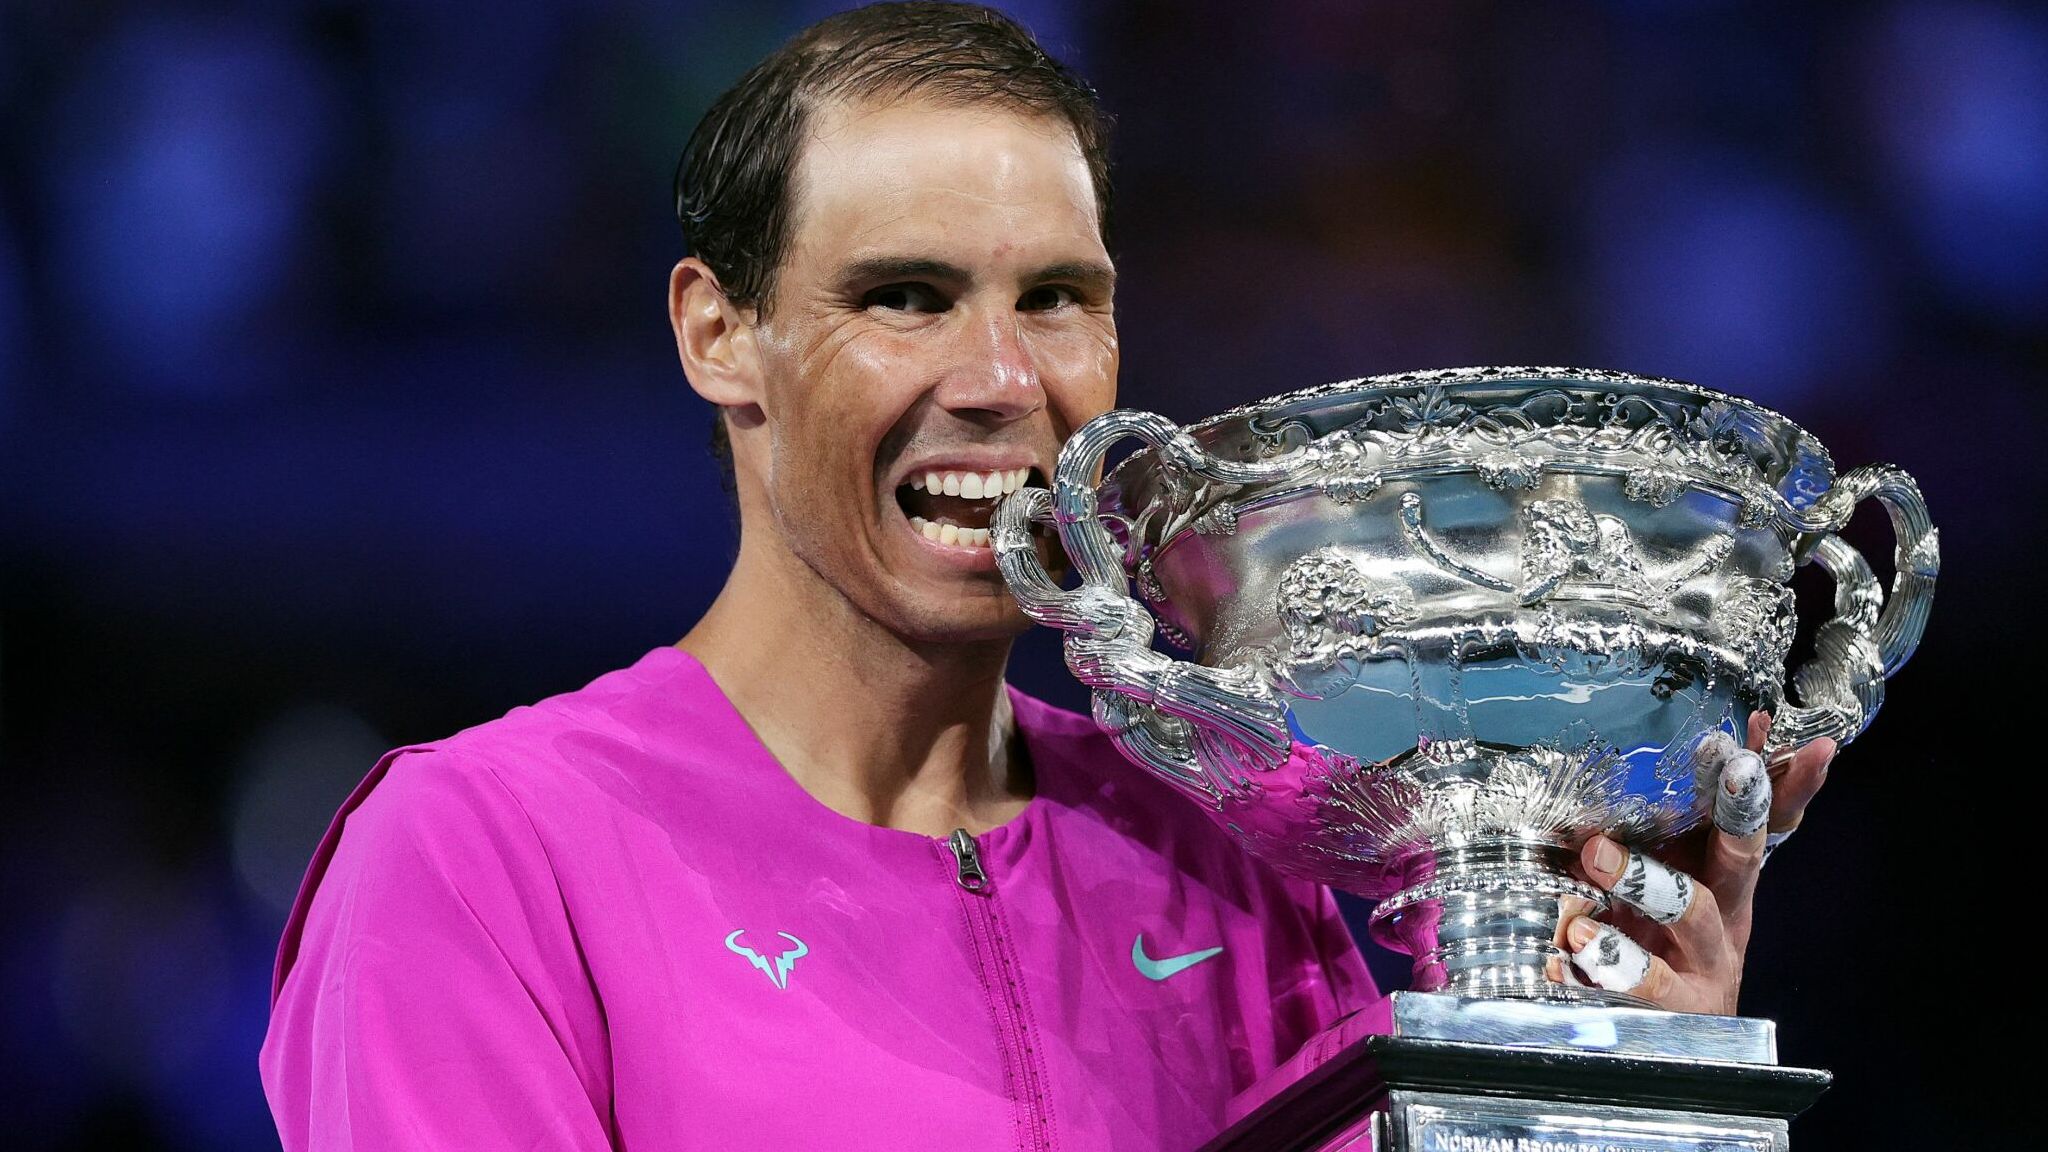 Australian Open Rafael Nadal defeats Daniil Medvedev in five-set epic to win record 21st Grand Slam title Tennis News Sky Sports